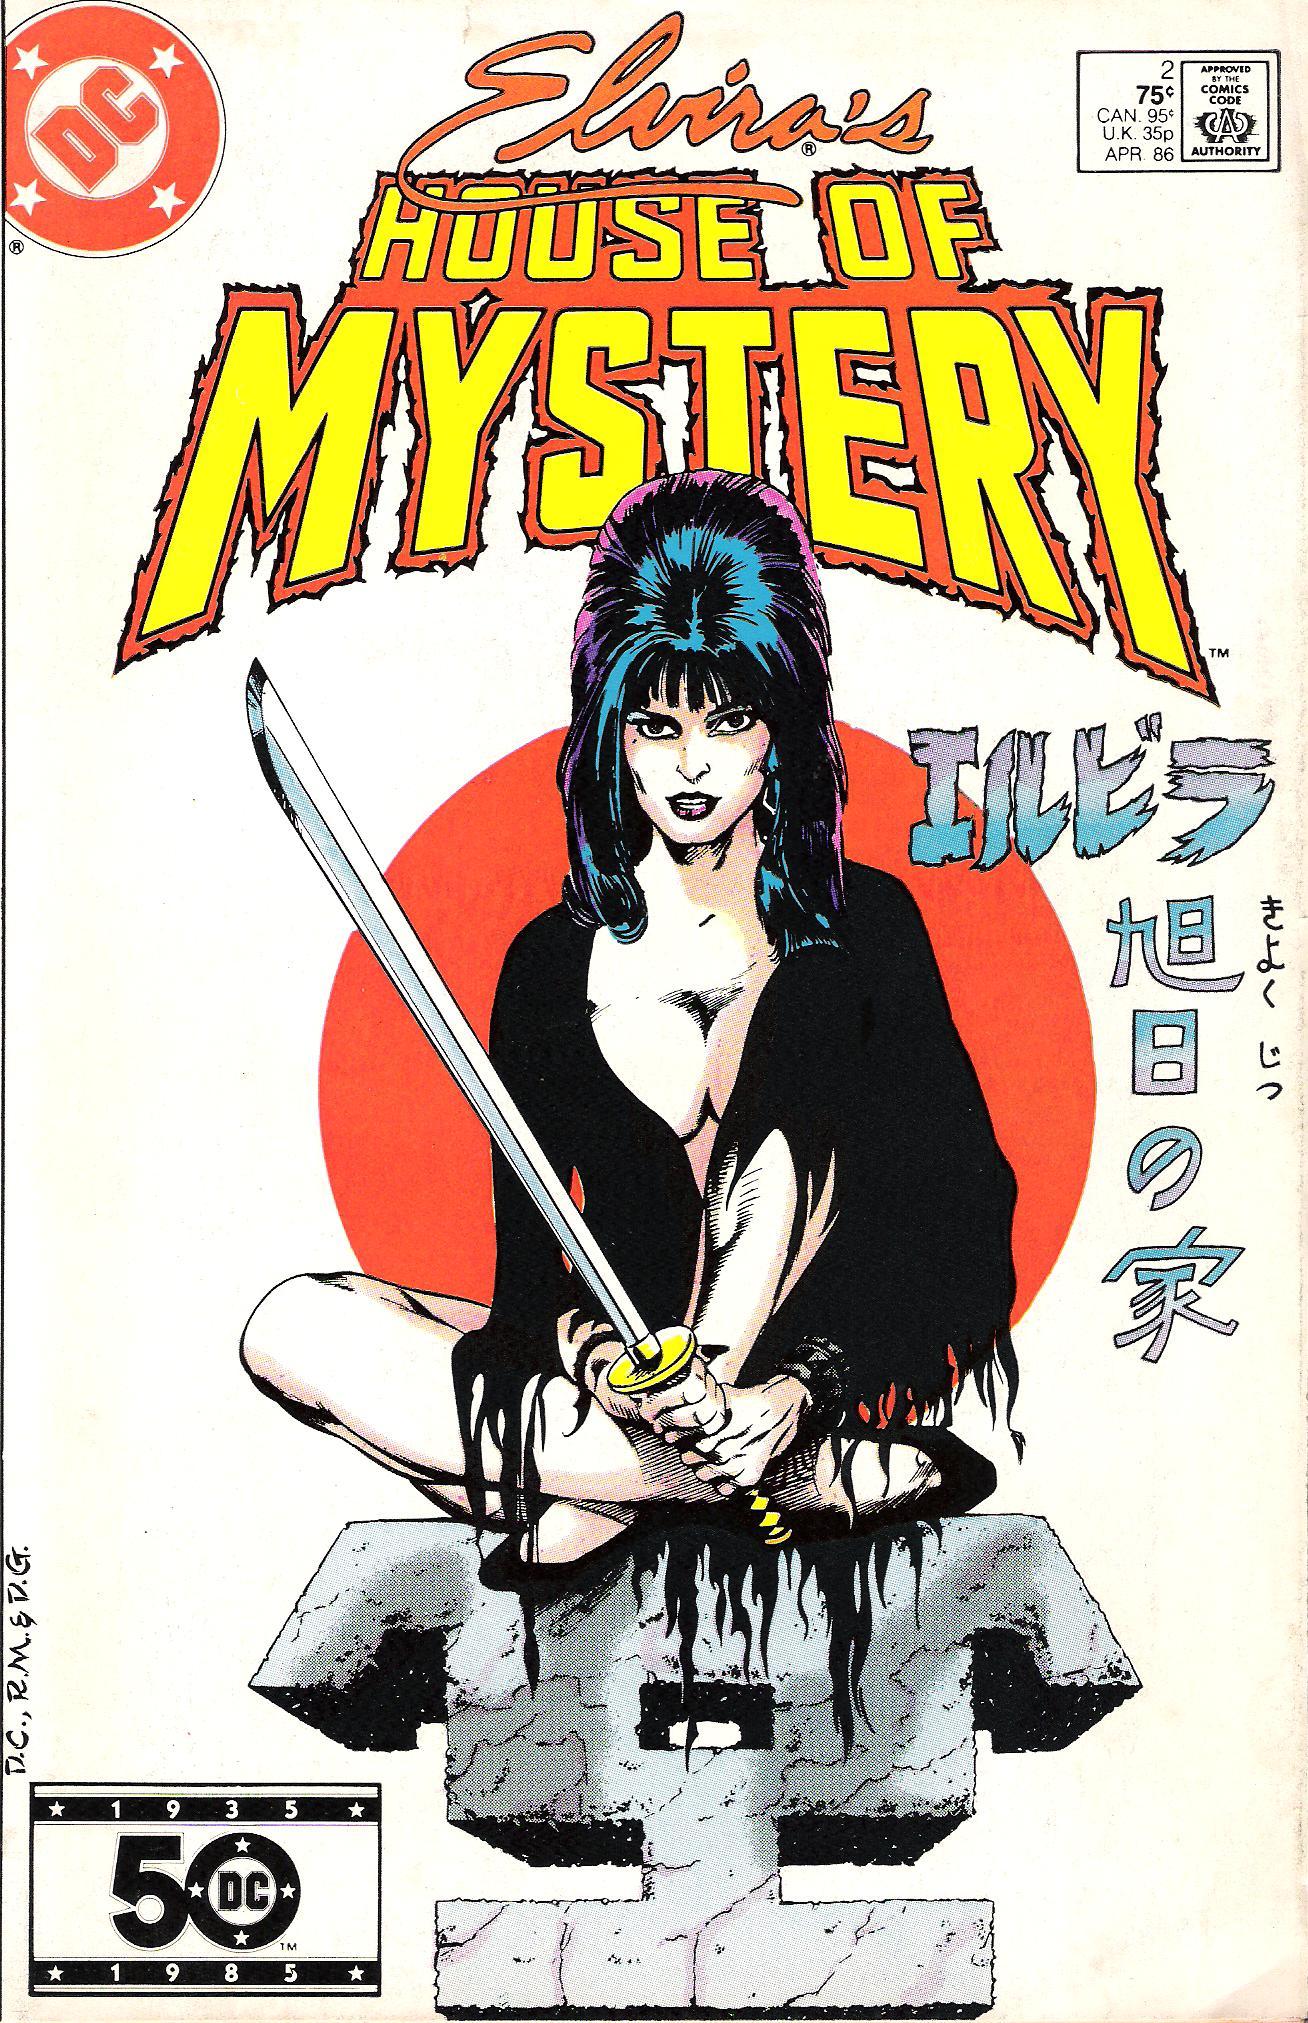 Elvira's House of Mystery Vol. 1 #2